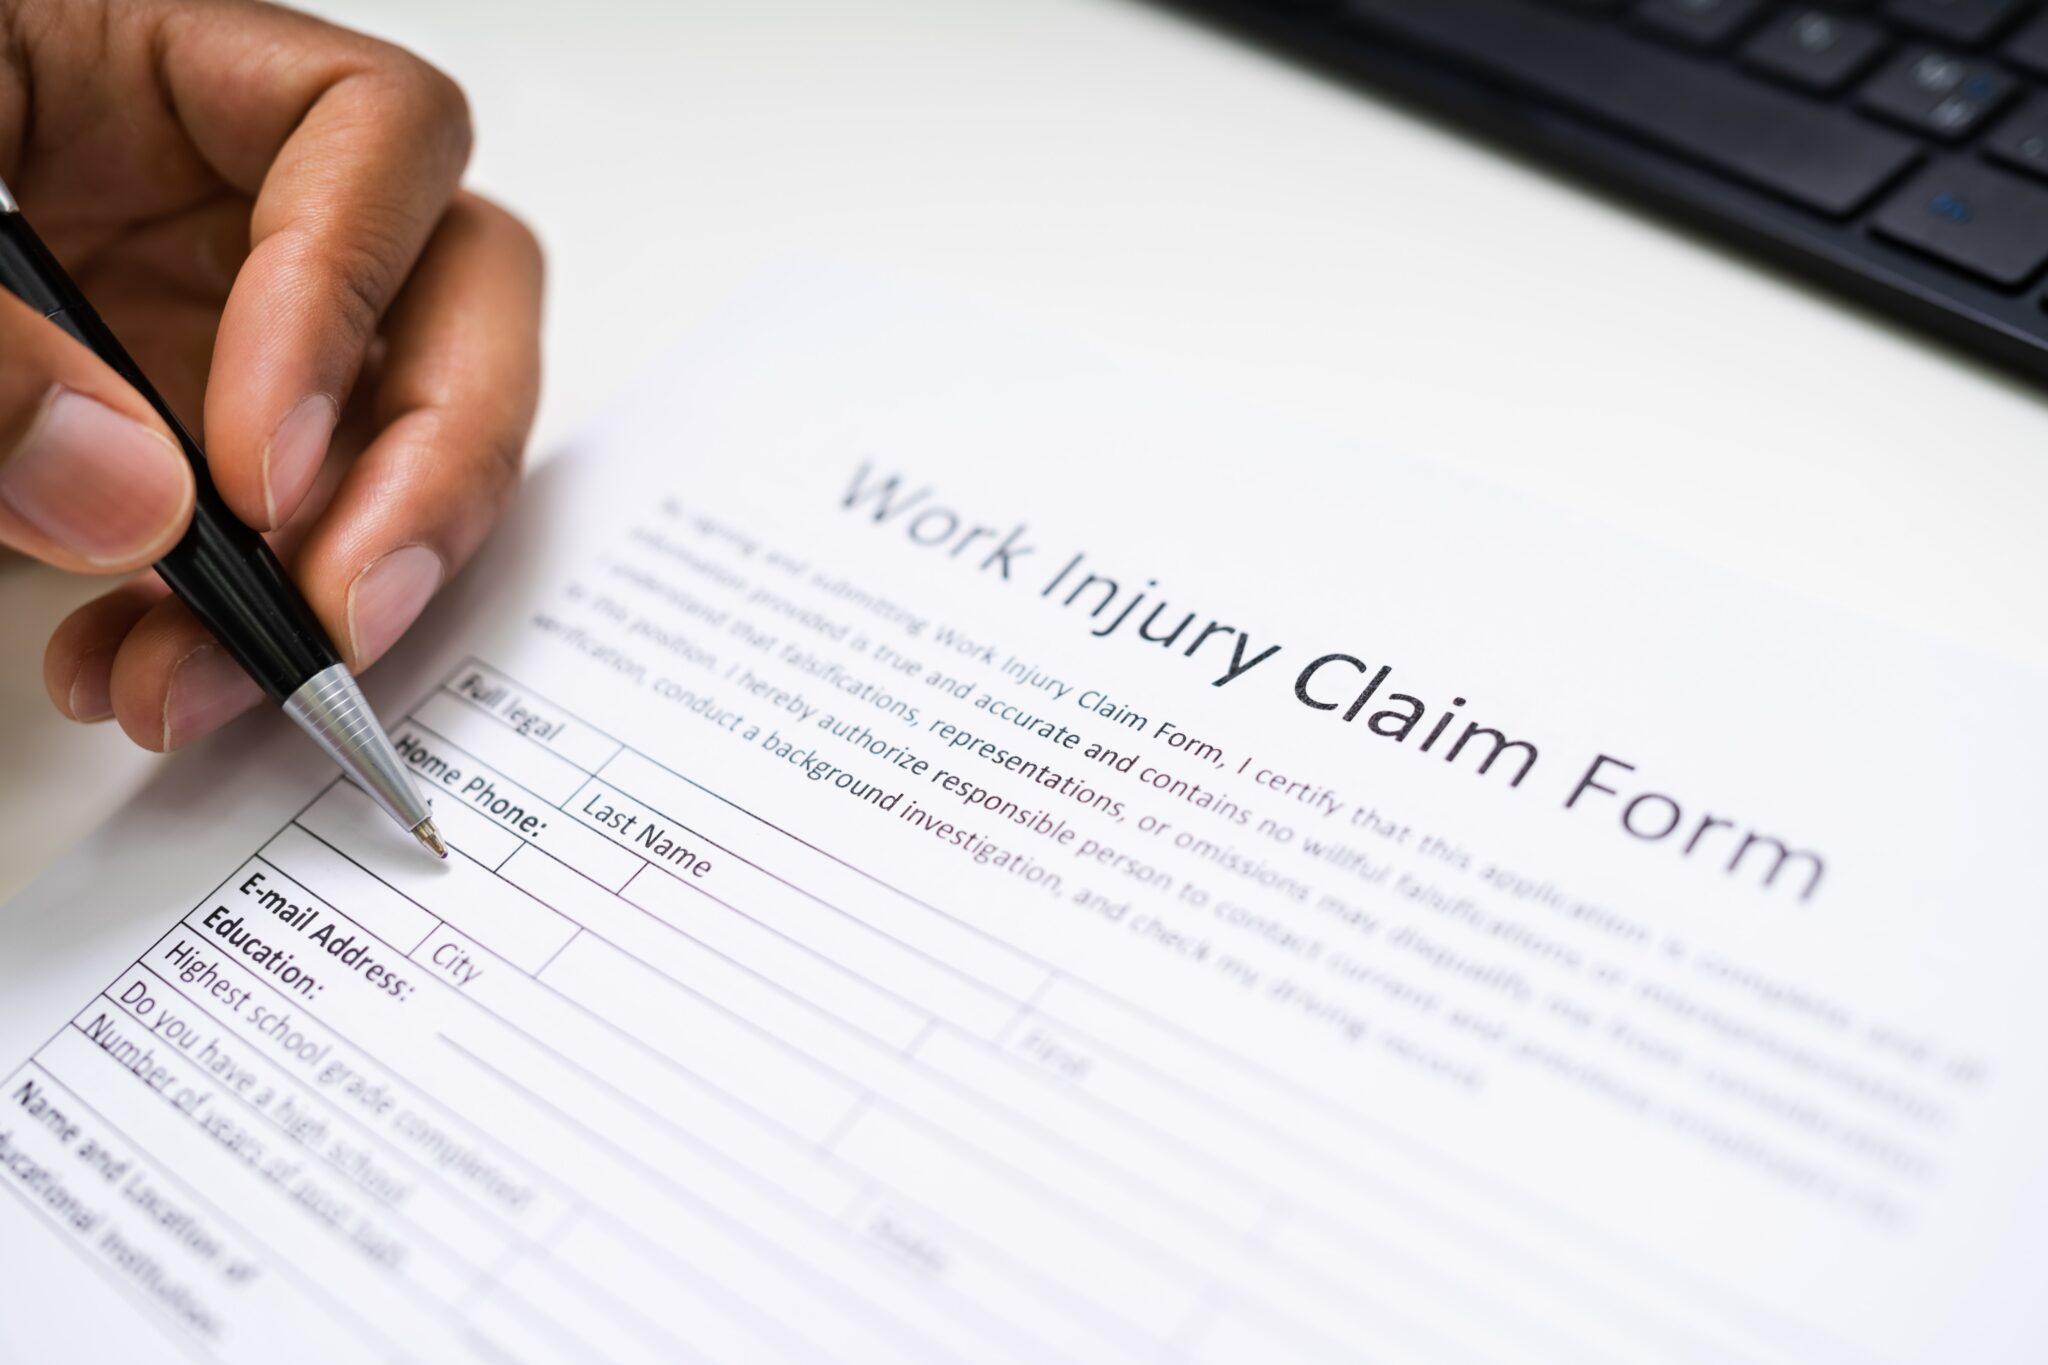 work injury compensation claim form